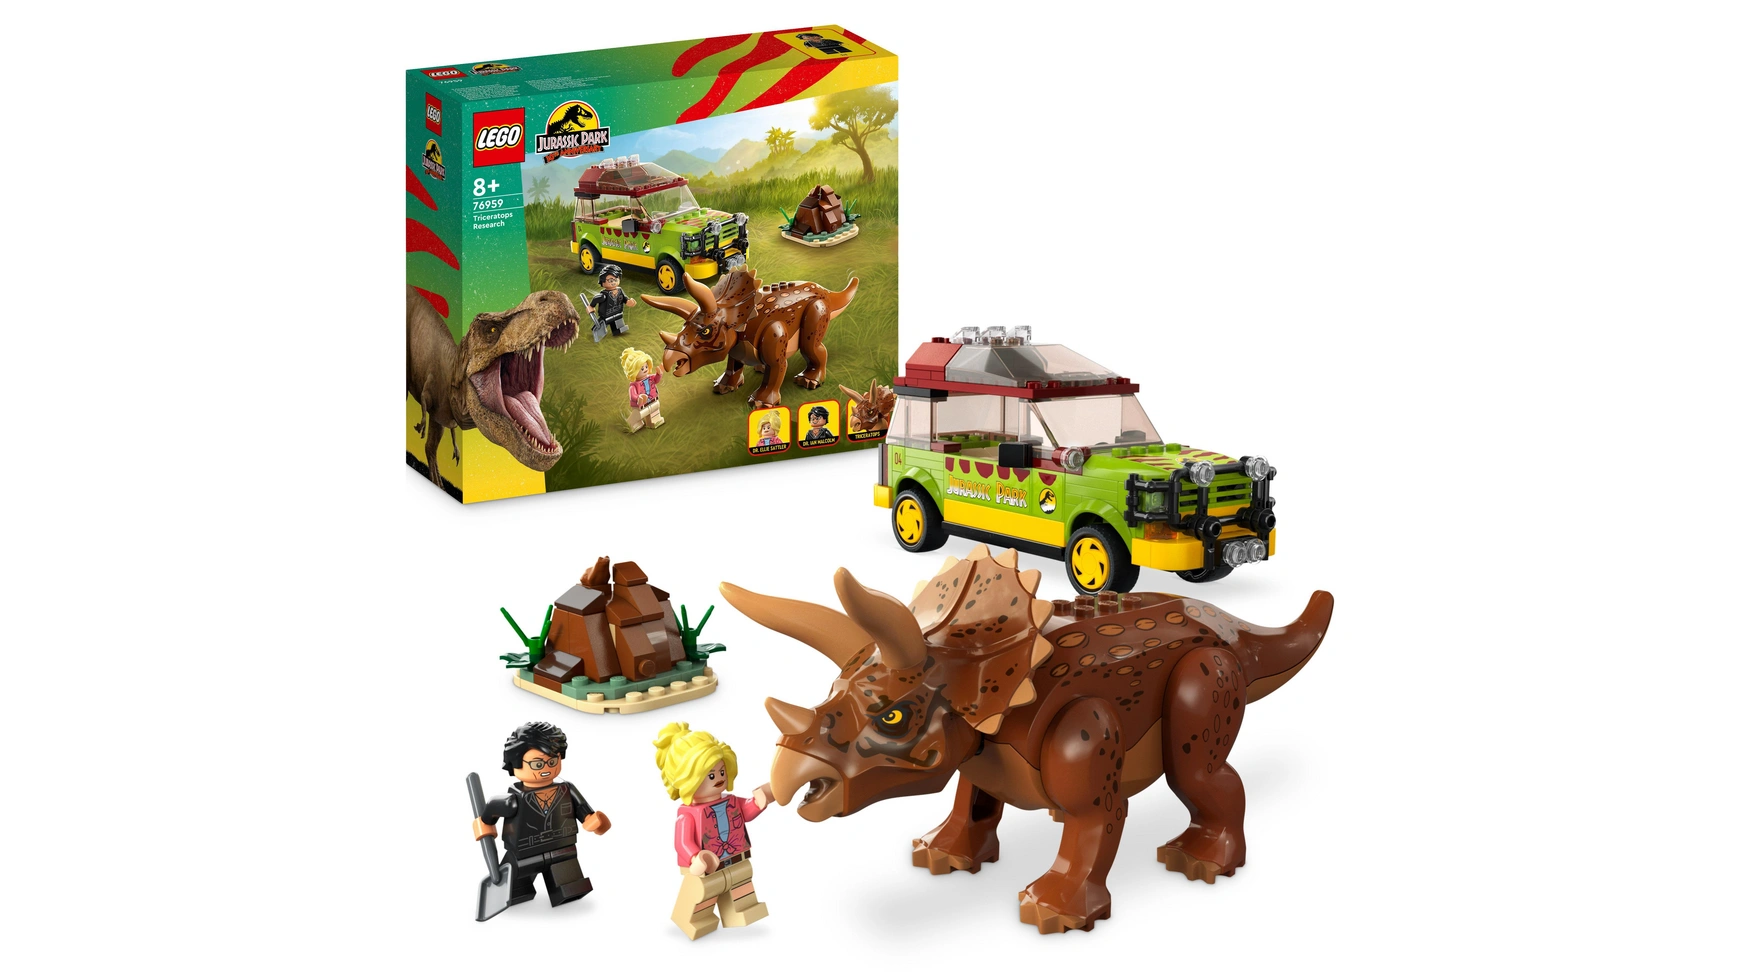 Lego Jurassic Park Исследования трицератопса набор значков jurassic park 1 2 pin kings 2 pack